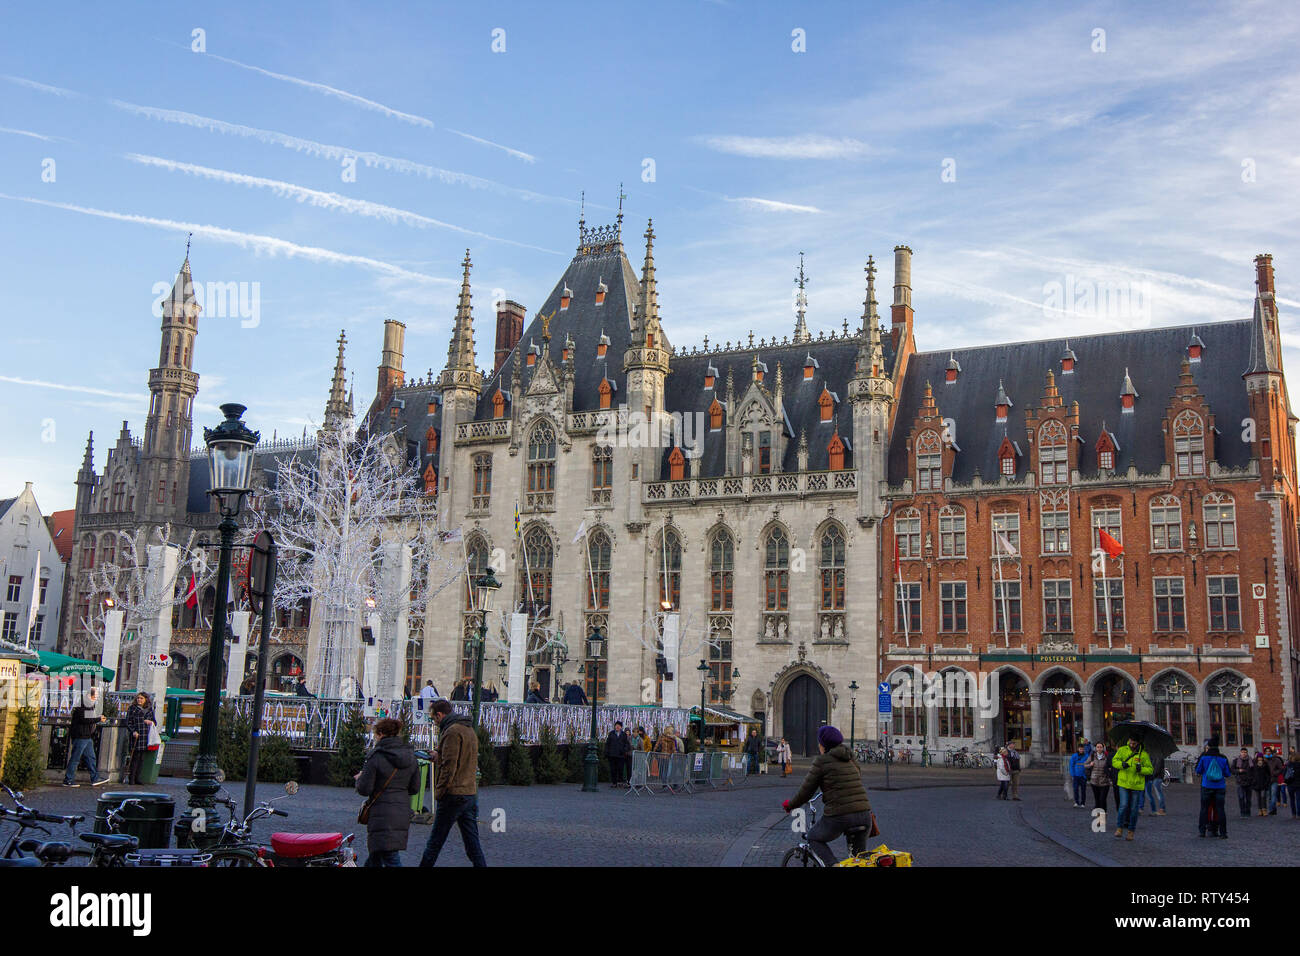 Het Provincoaal Hof or Provincial Palace in Bruges Belgium Stock Photo